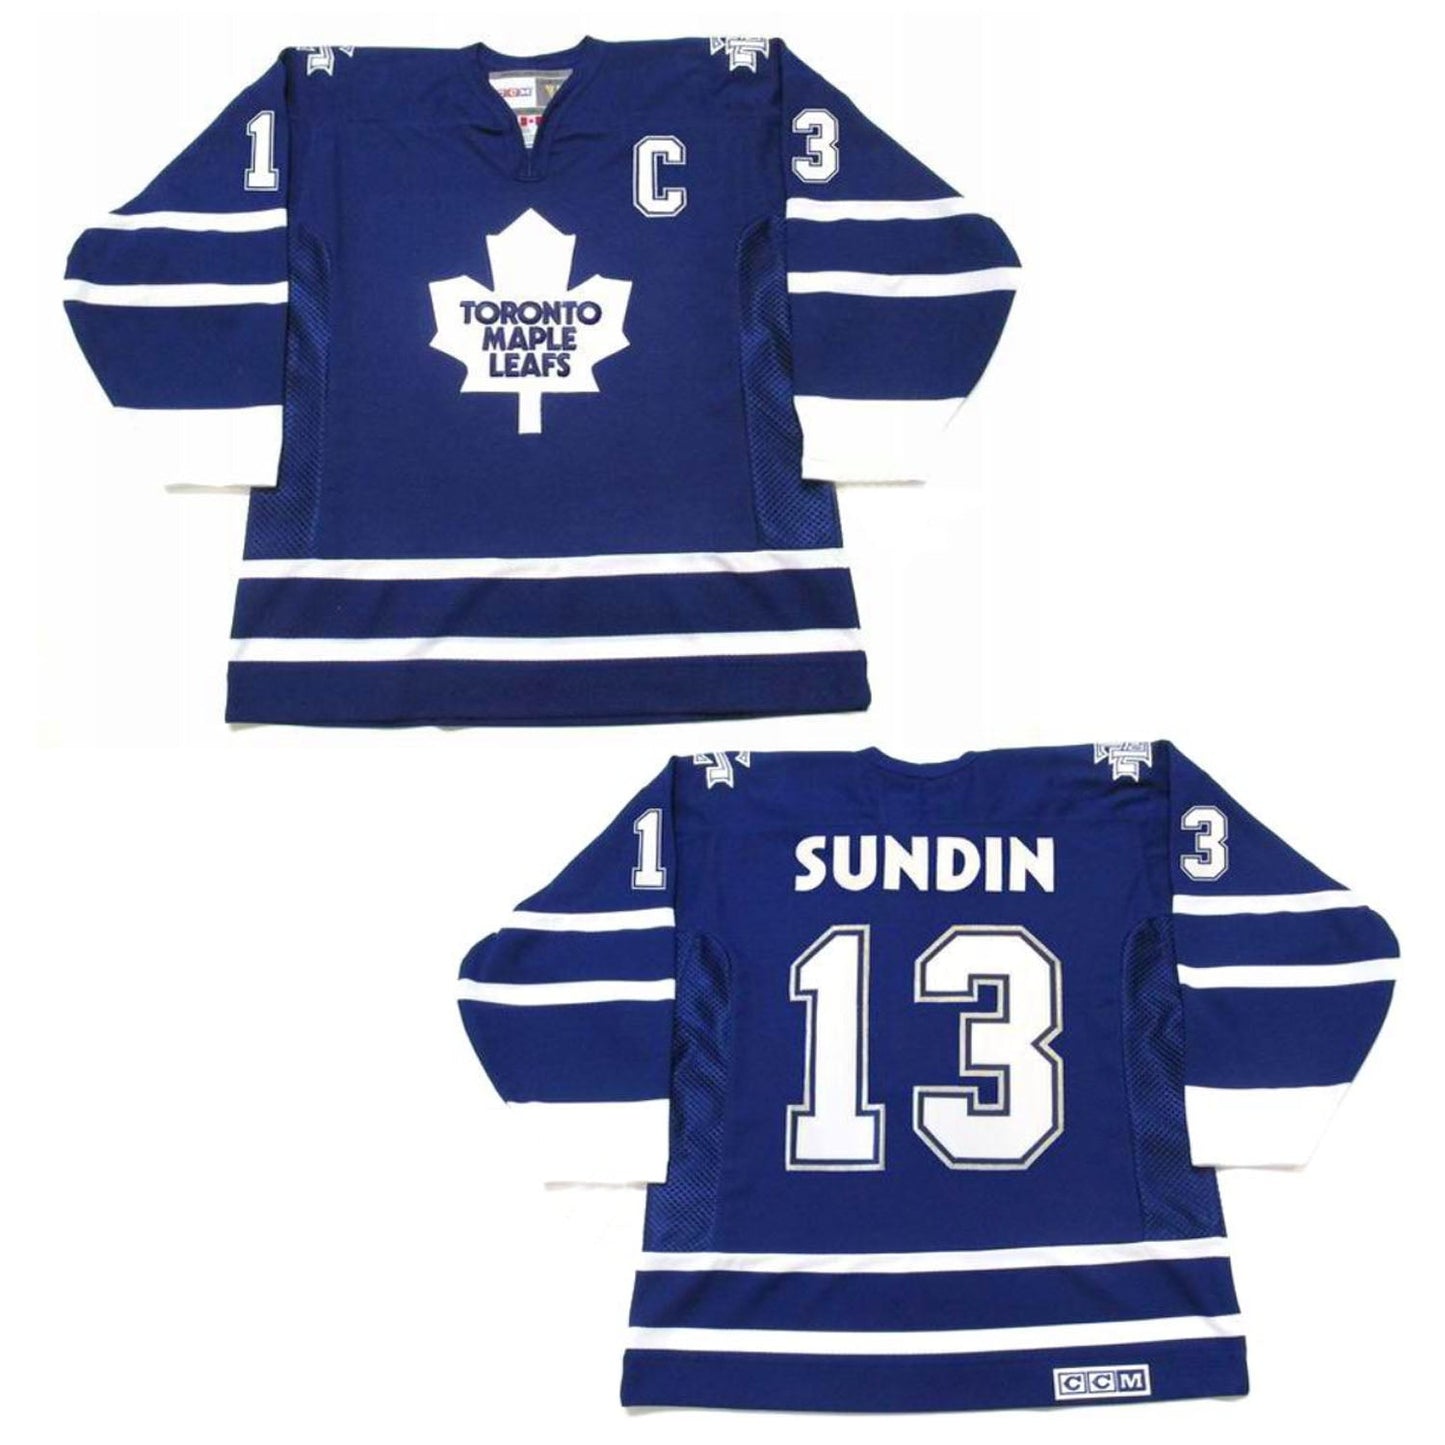 NHL Mats Sundin Toronto Maple Leafs 13 Jersey